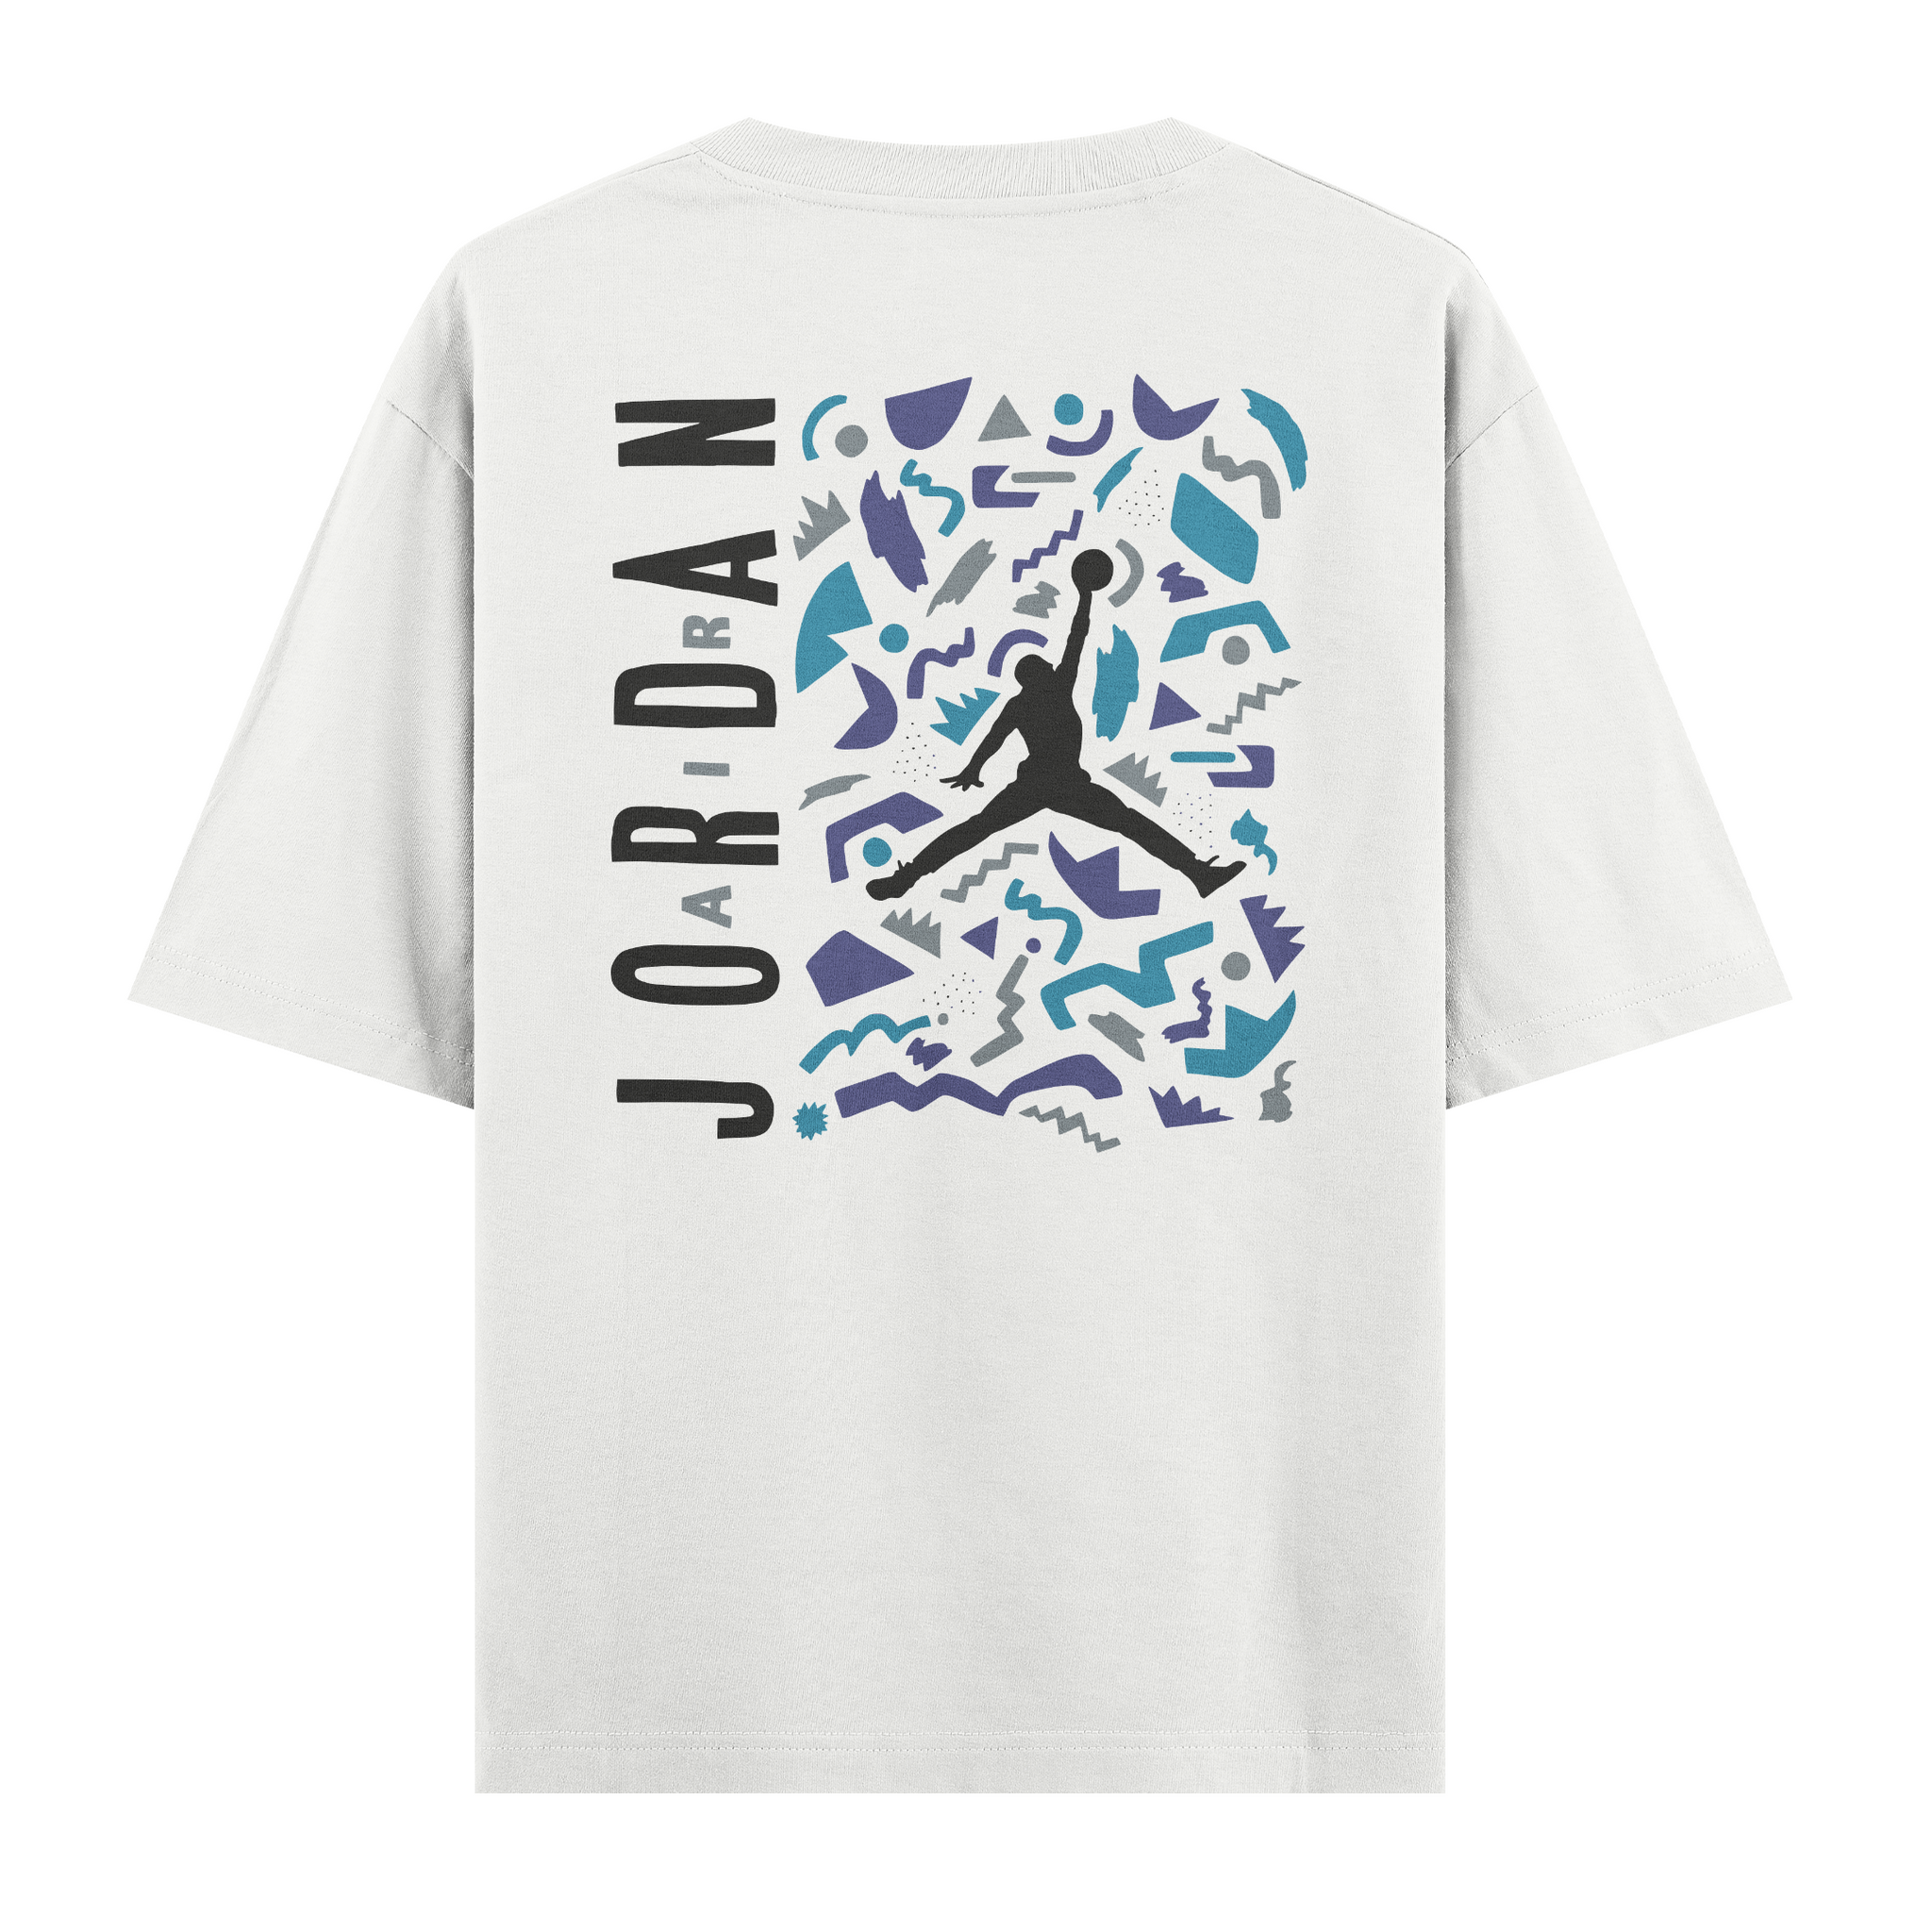 Jordan - Oversize T-shirt